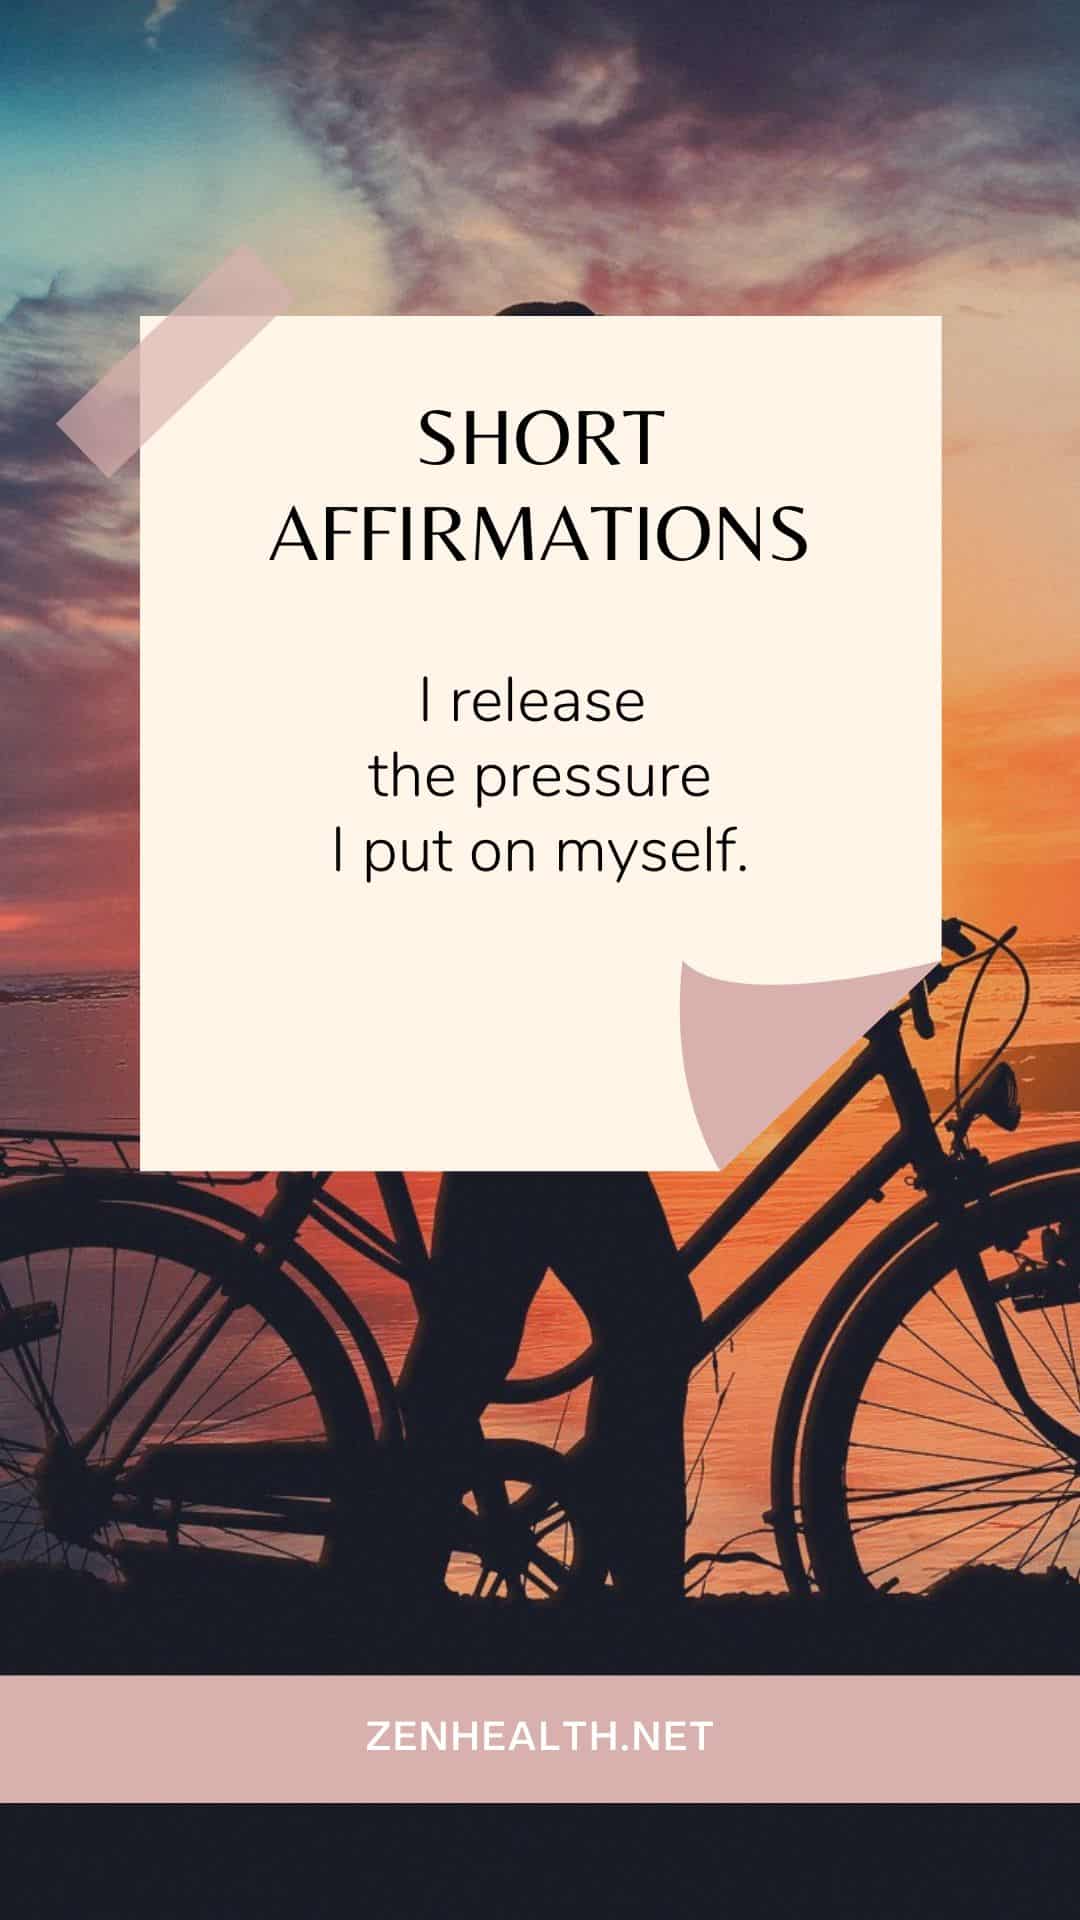 short affirmations: I release the pressure I put on myself